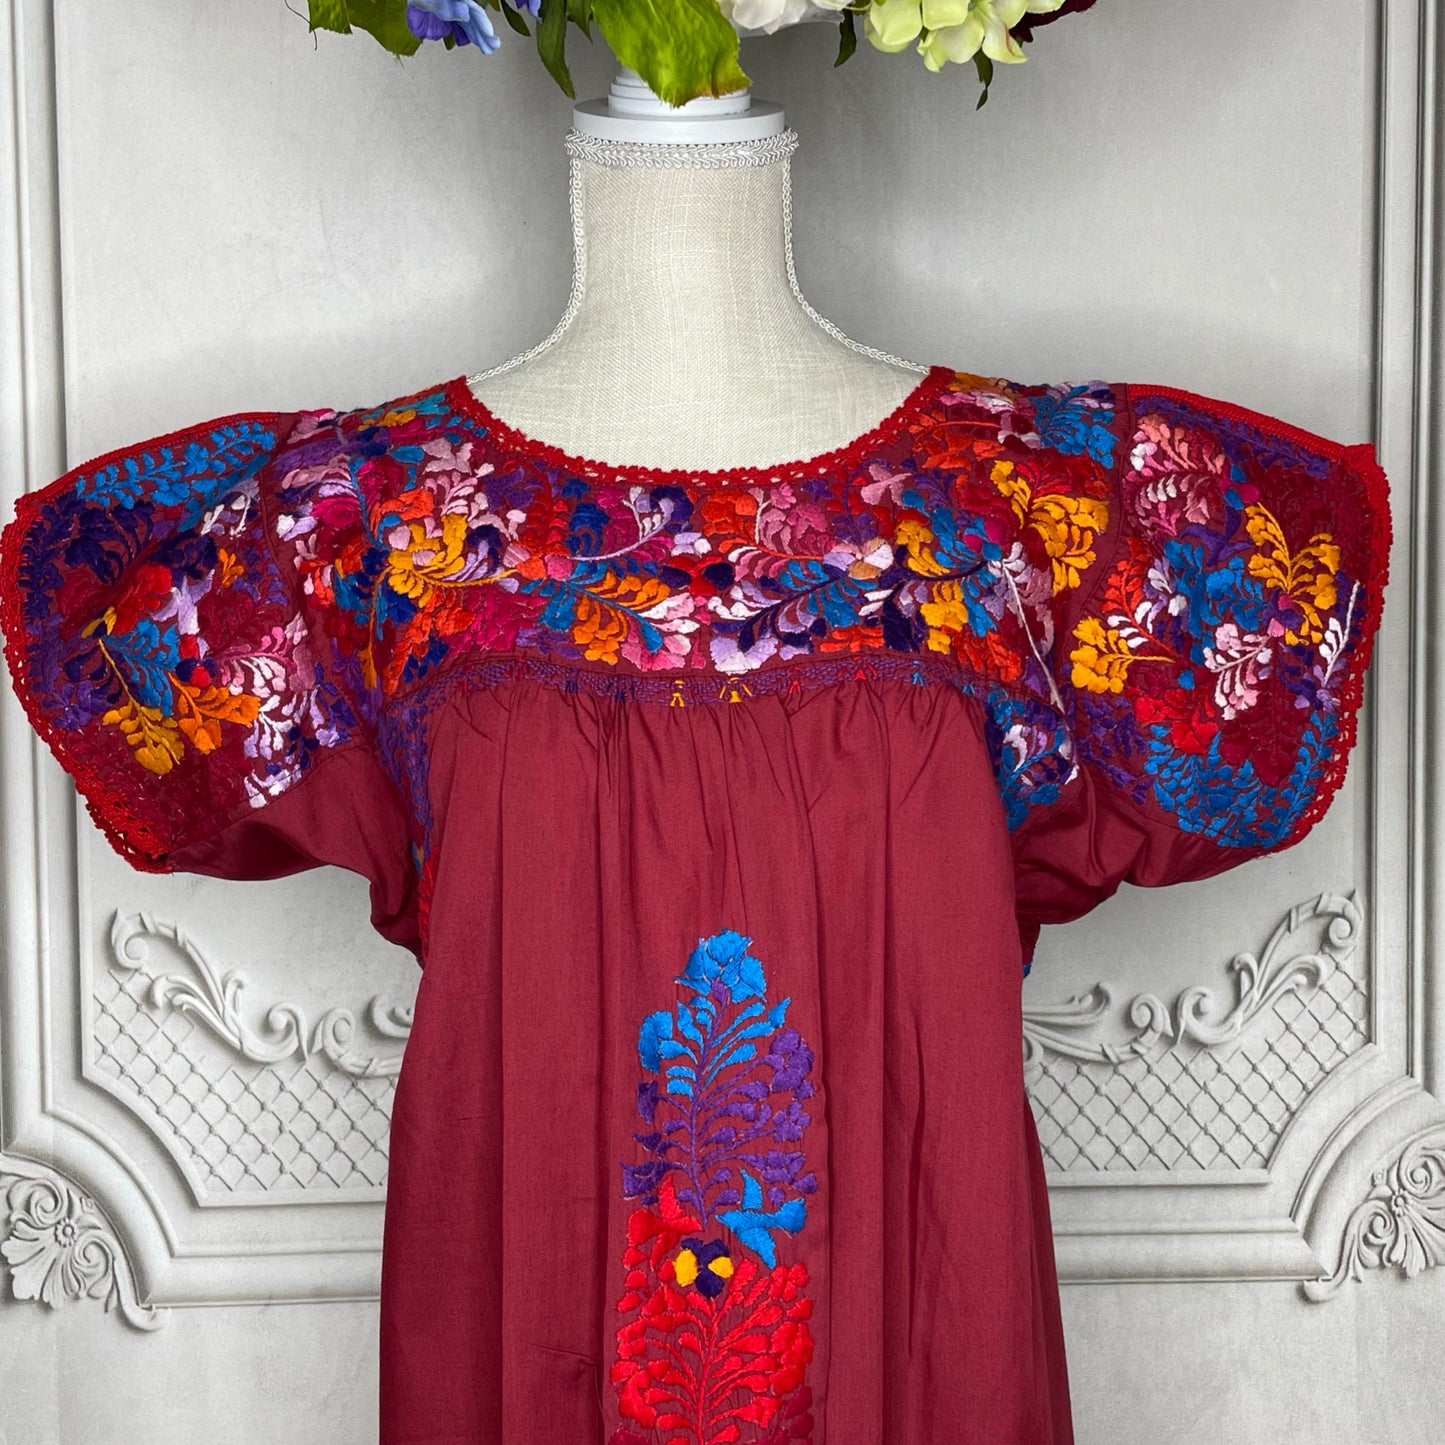 San Antonino Gala Mexican Dress - Long Cotton Embroidery